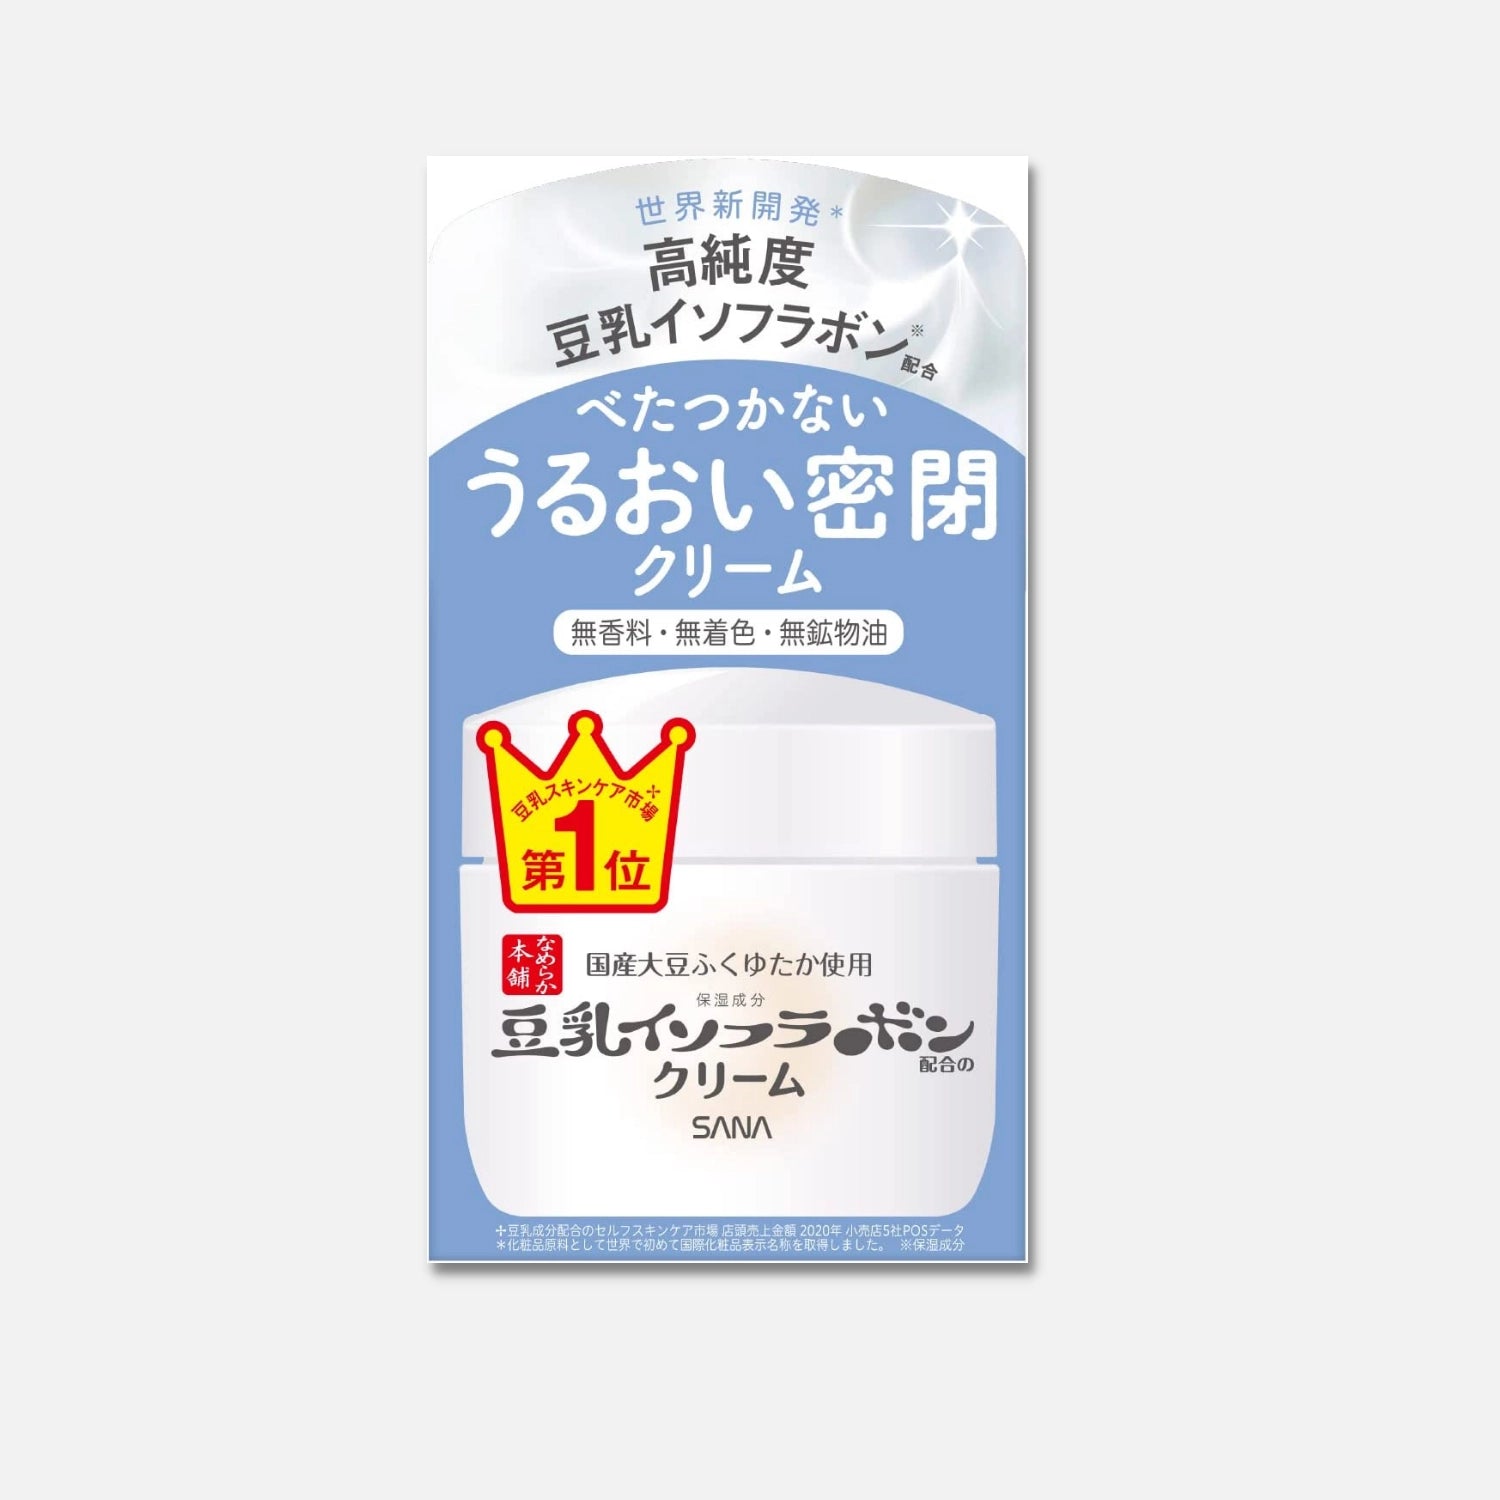 Sana Soy Isoflavones Moisturizing Face Cream 50g - Buy Me Japan